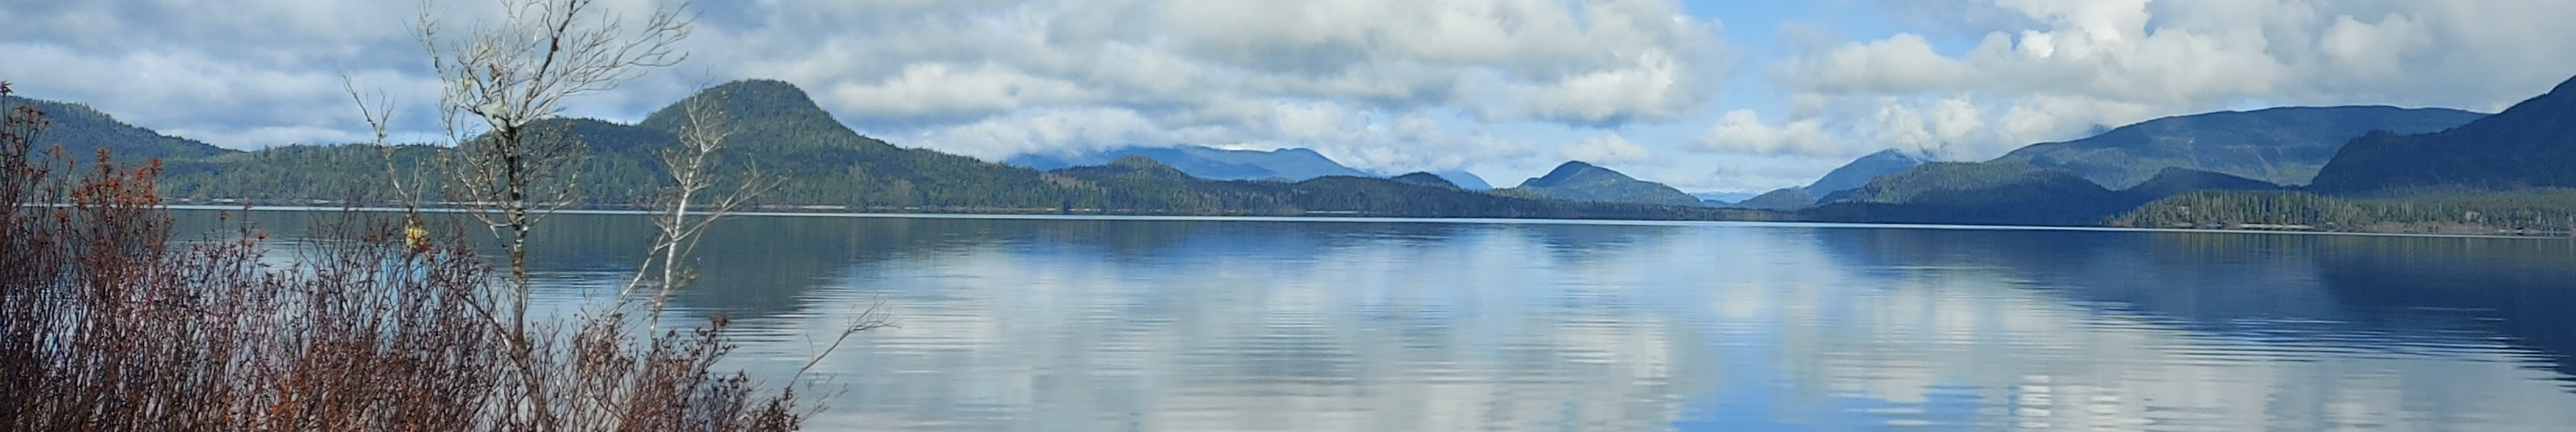 Vancouver Island Lake